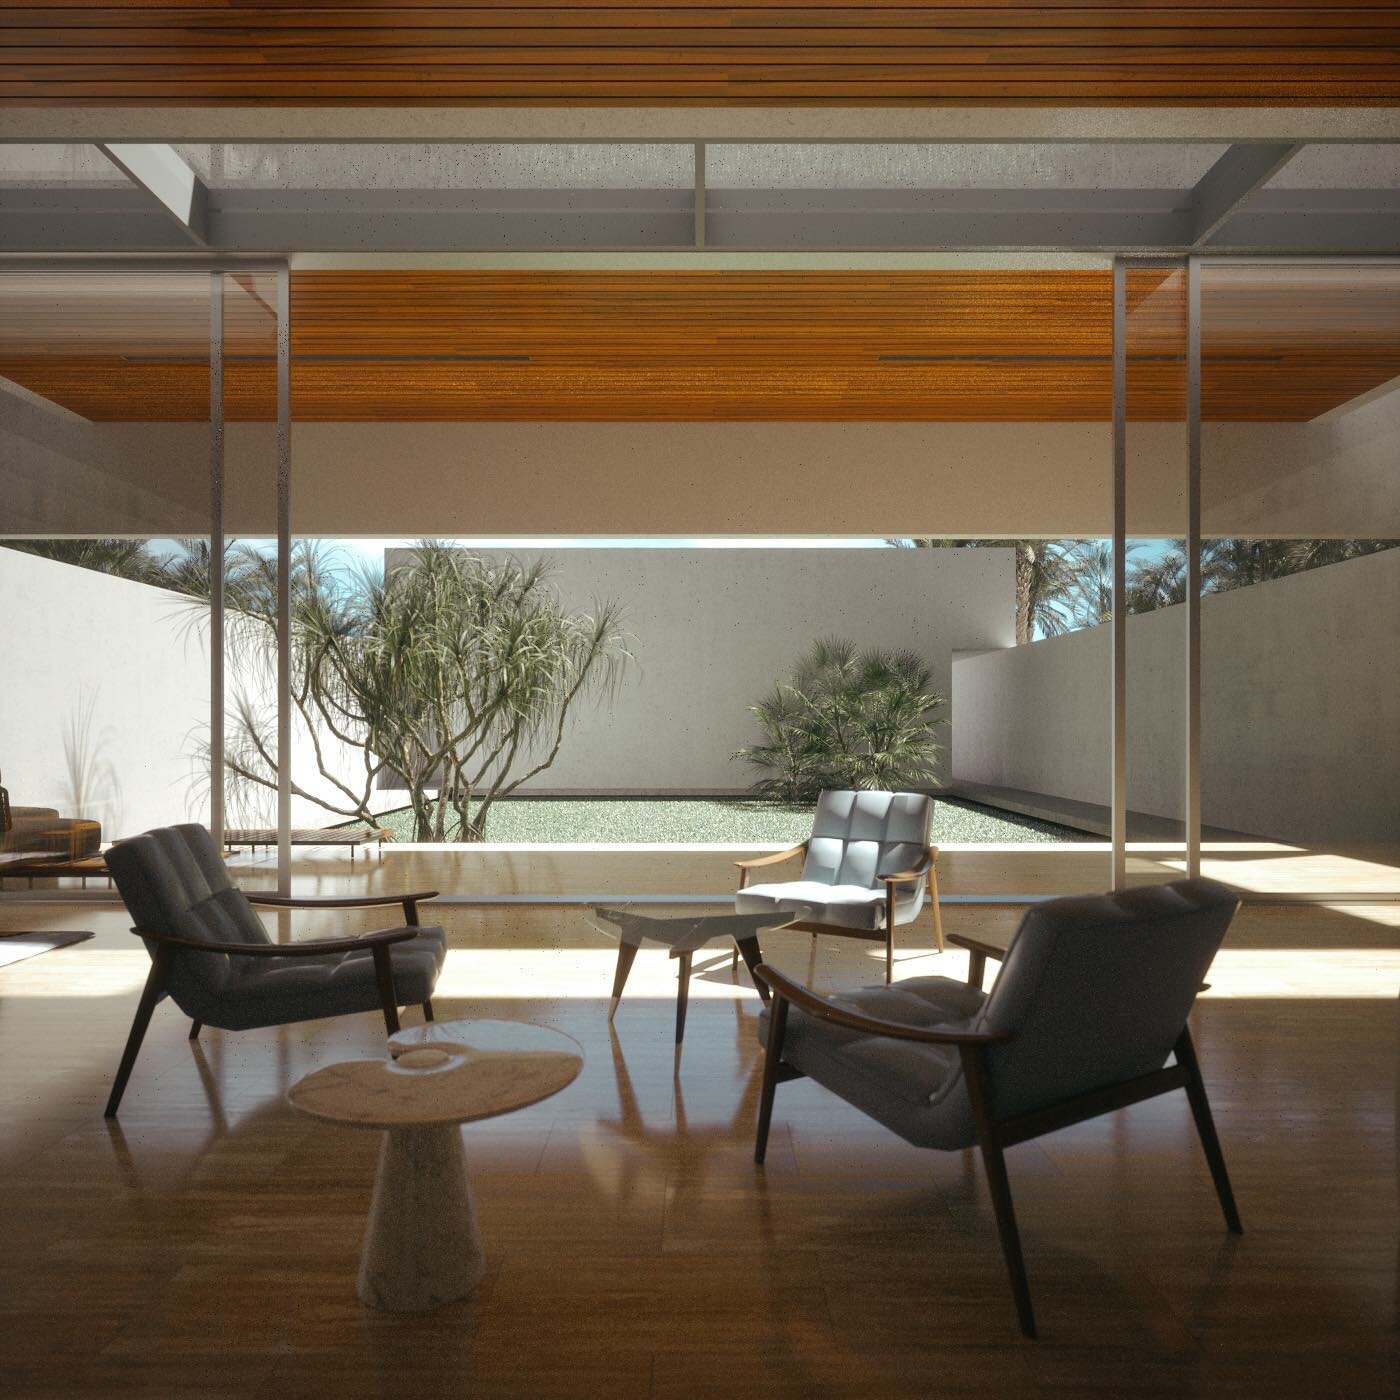 Hilo Pix ⁣
again ⁣
😃⁣
#archilovers⁣
#architecture⁣
#tropicalmodern⁣
#moderndesign⁣